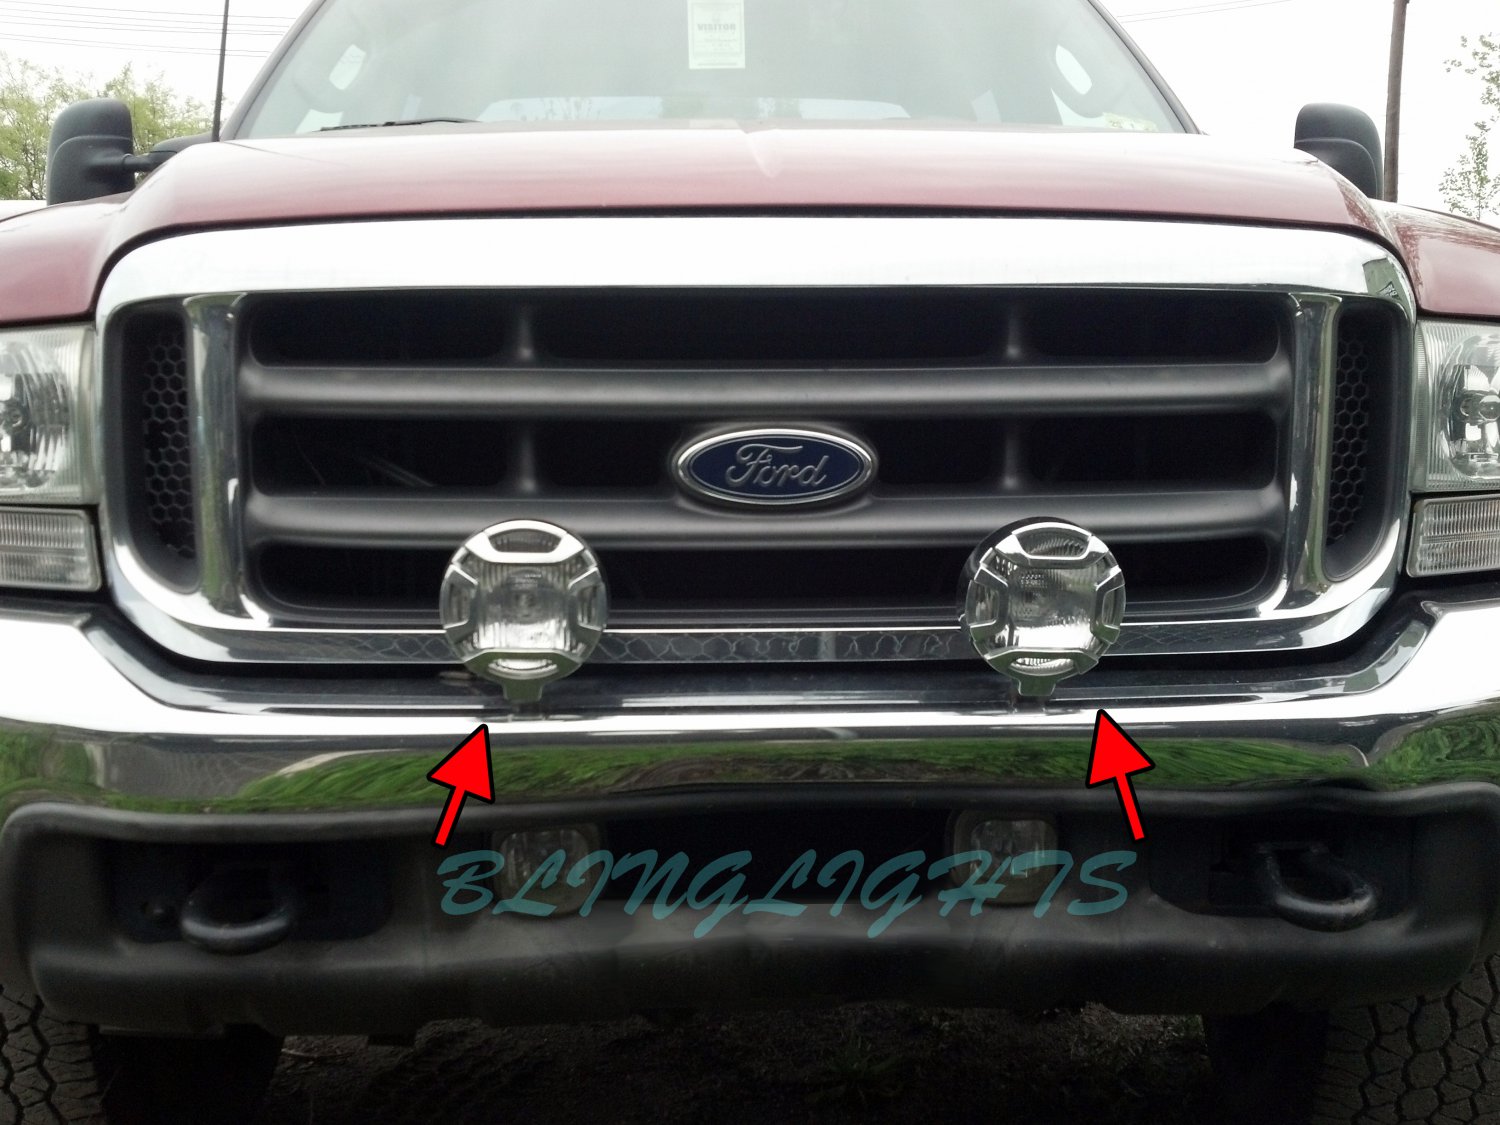 Ford ranger front bumper light bar #1